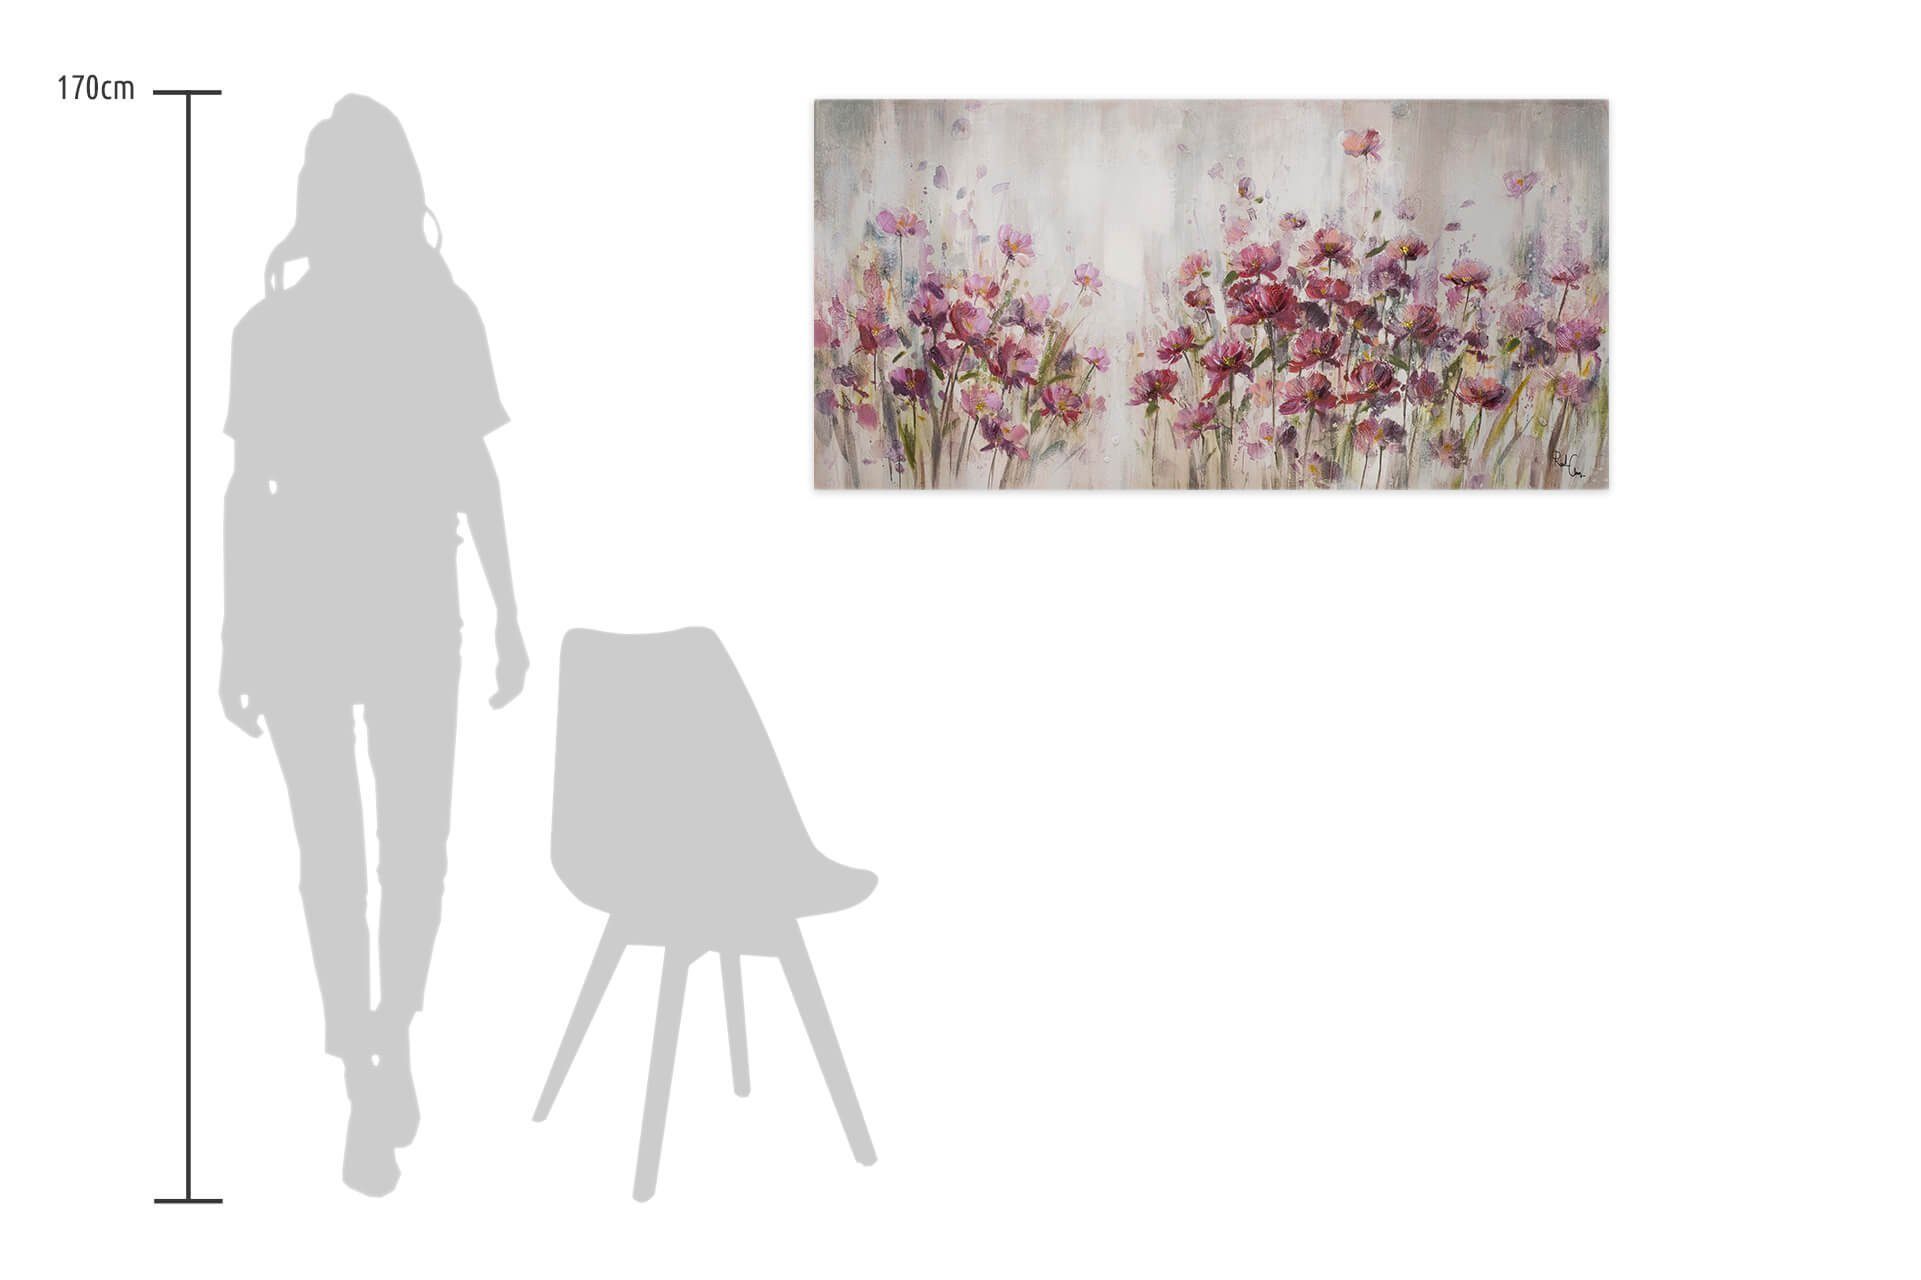 Wohnzimmer Reverie Wandbild KUNSTLOFT Lilac cm, 100% Leinwandbild 120x60 Gemälde HANDGEMALT